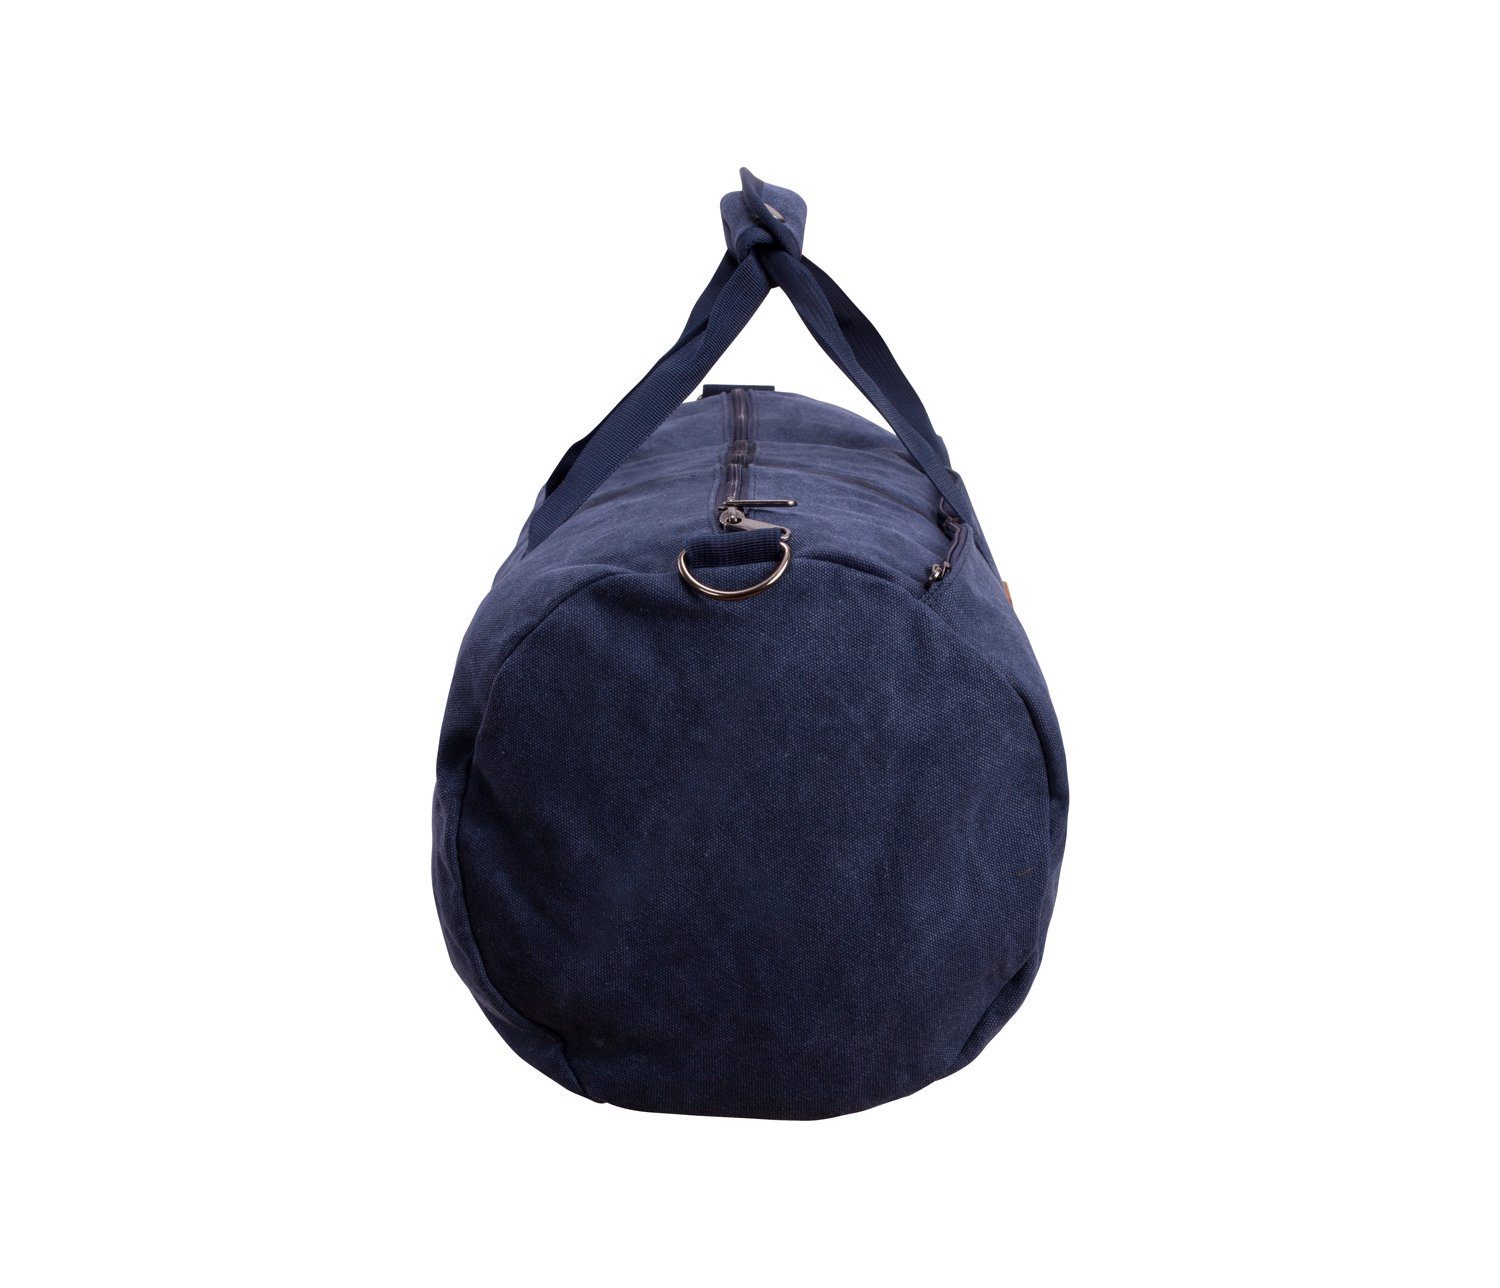 Manufaktur13 Sporttasche - Bag Duffel Navy Sporttasche, Bag, Fassungsvermögen 24L Barrel Canvas